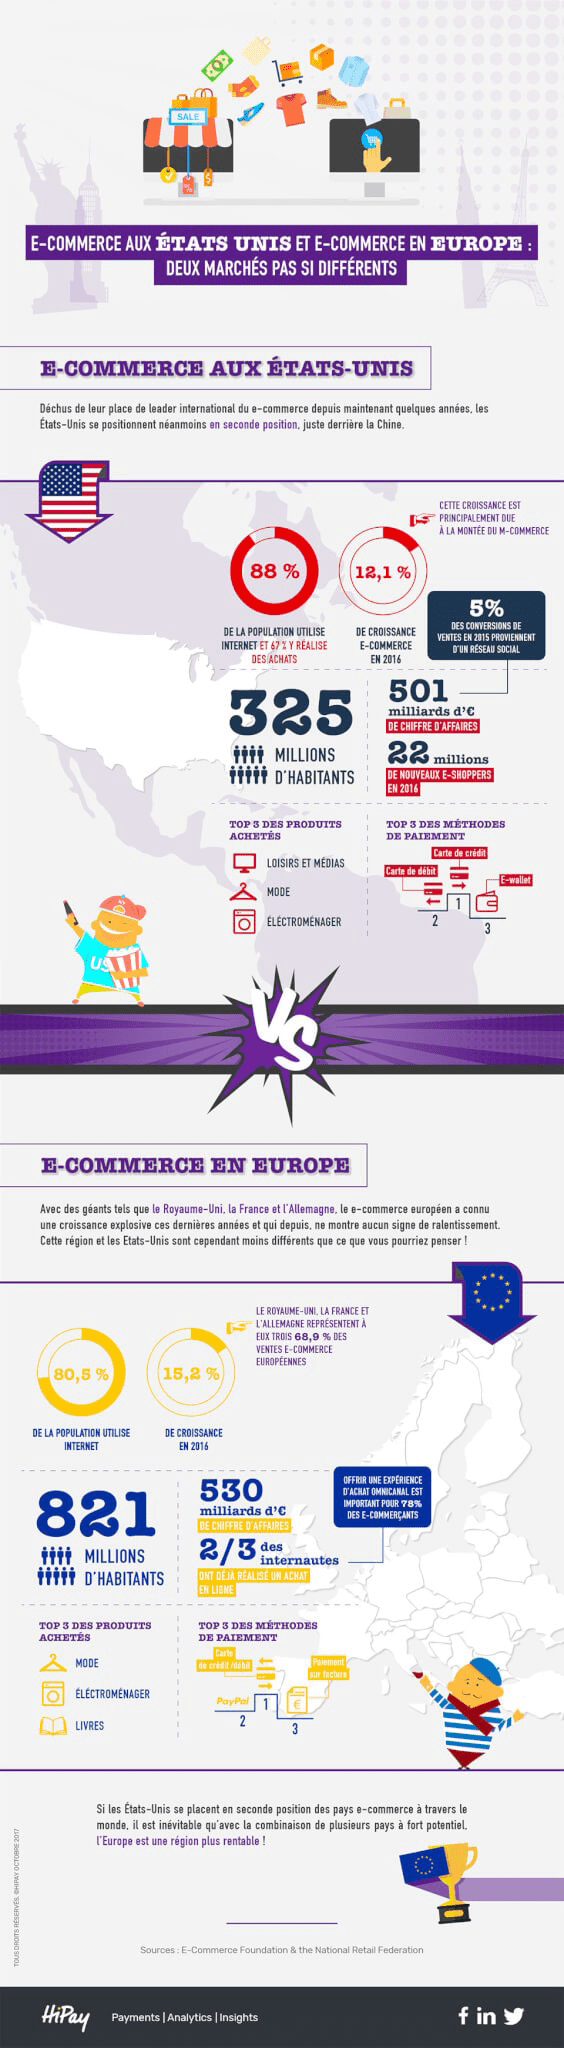 infographie differences ecommerce europe etats unis